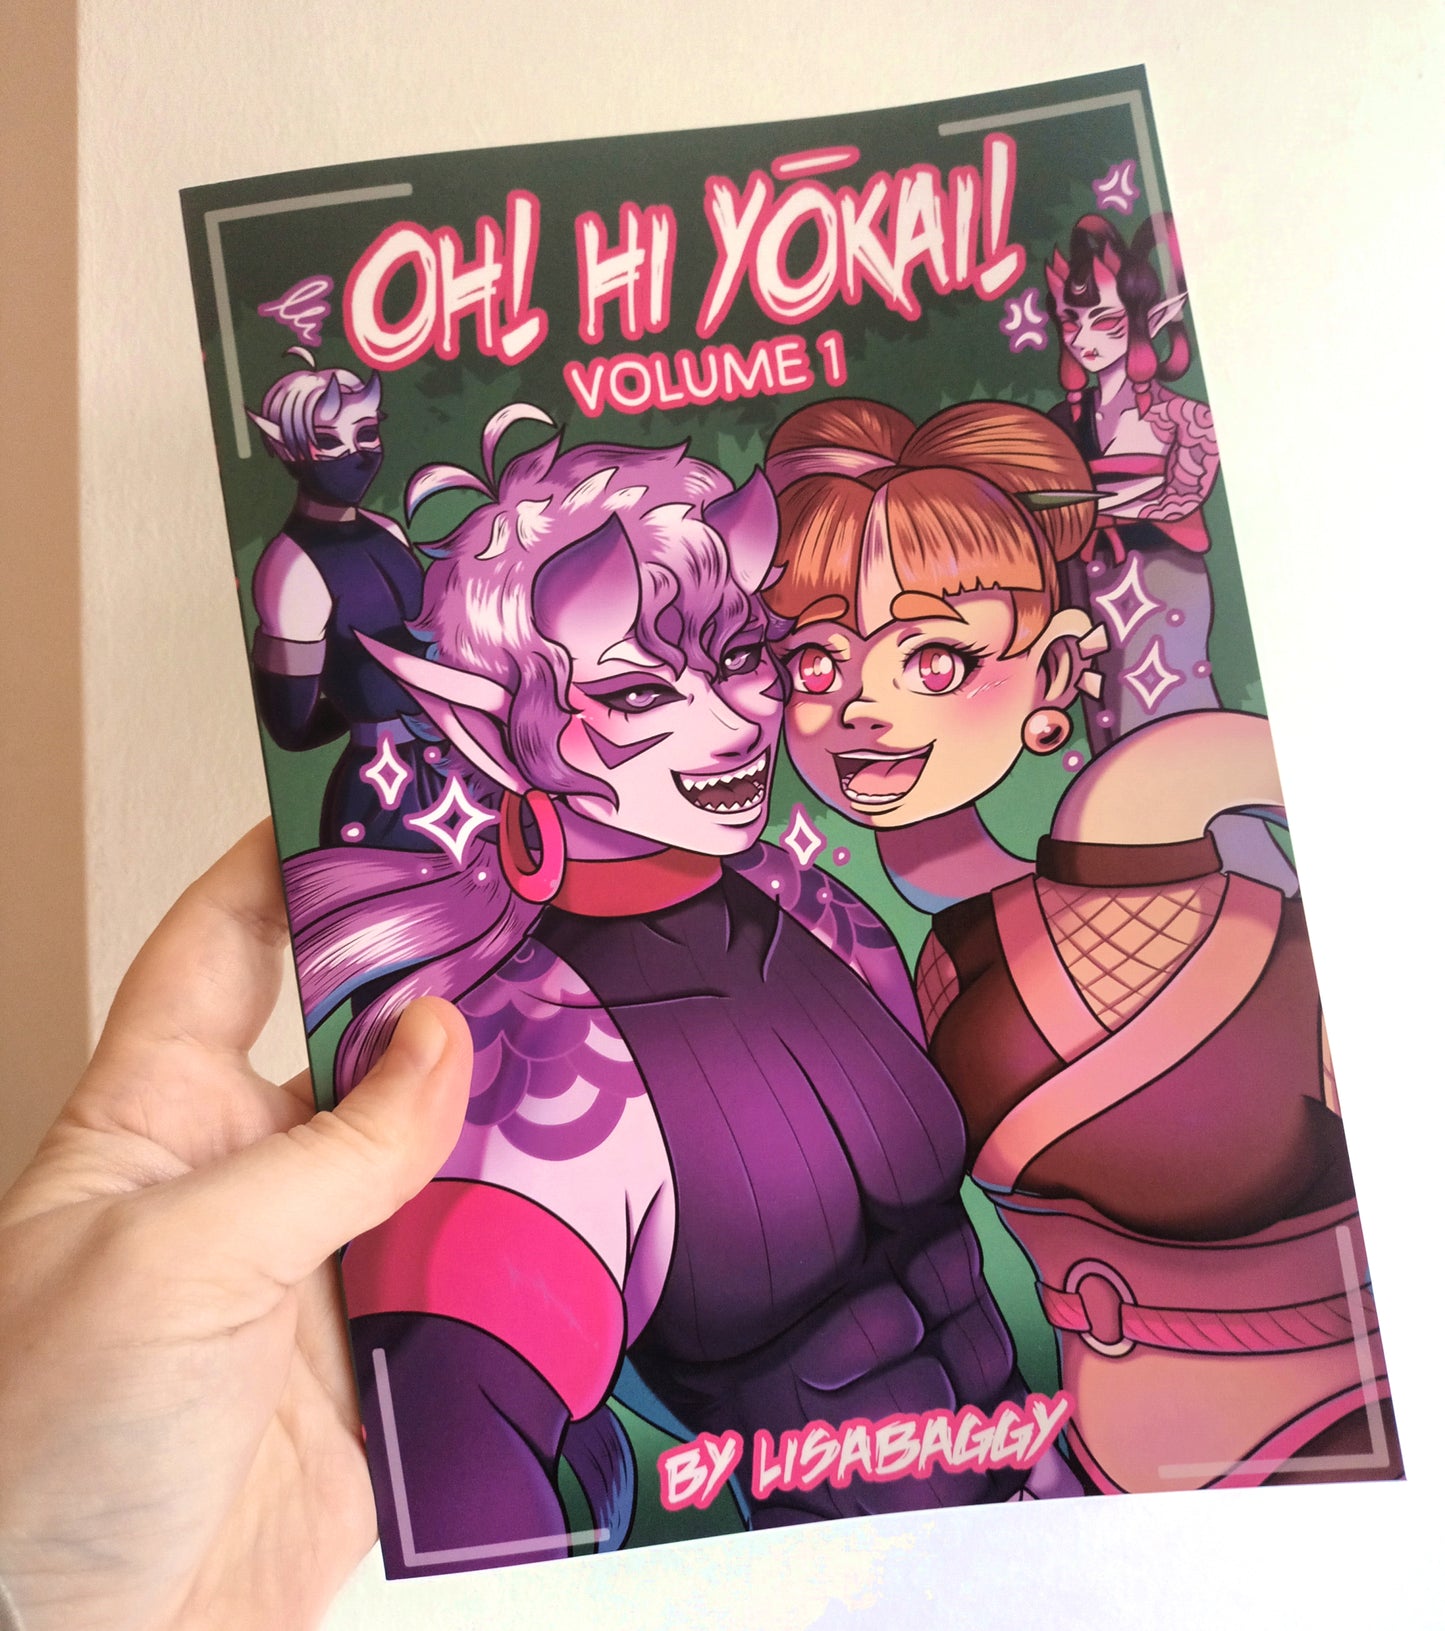 Oh! Hi Yokai! Volume 1